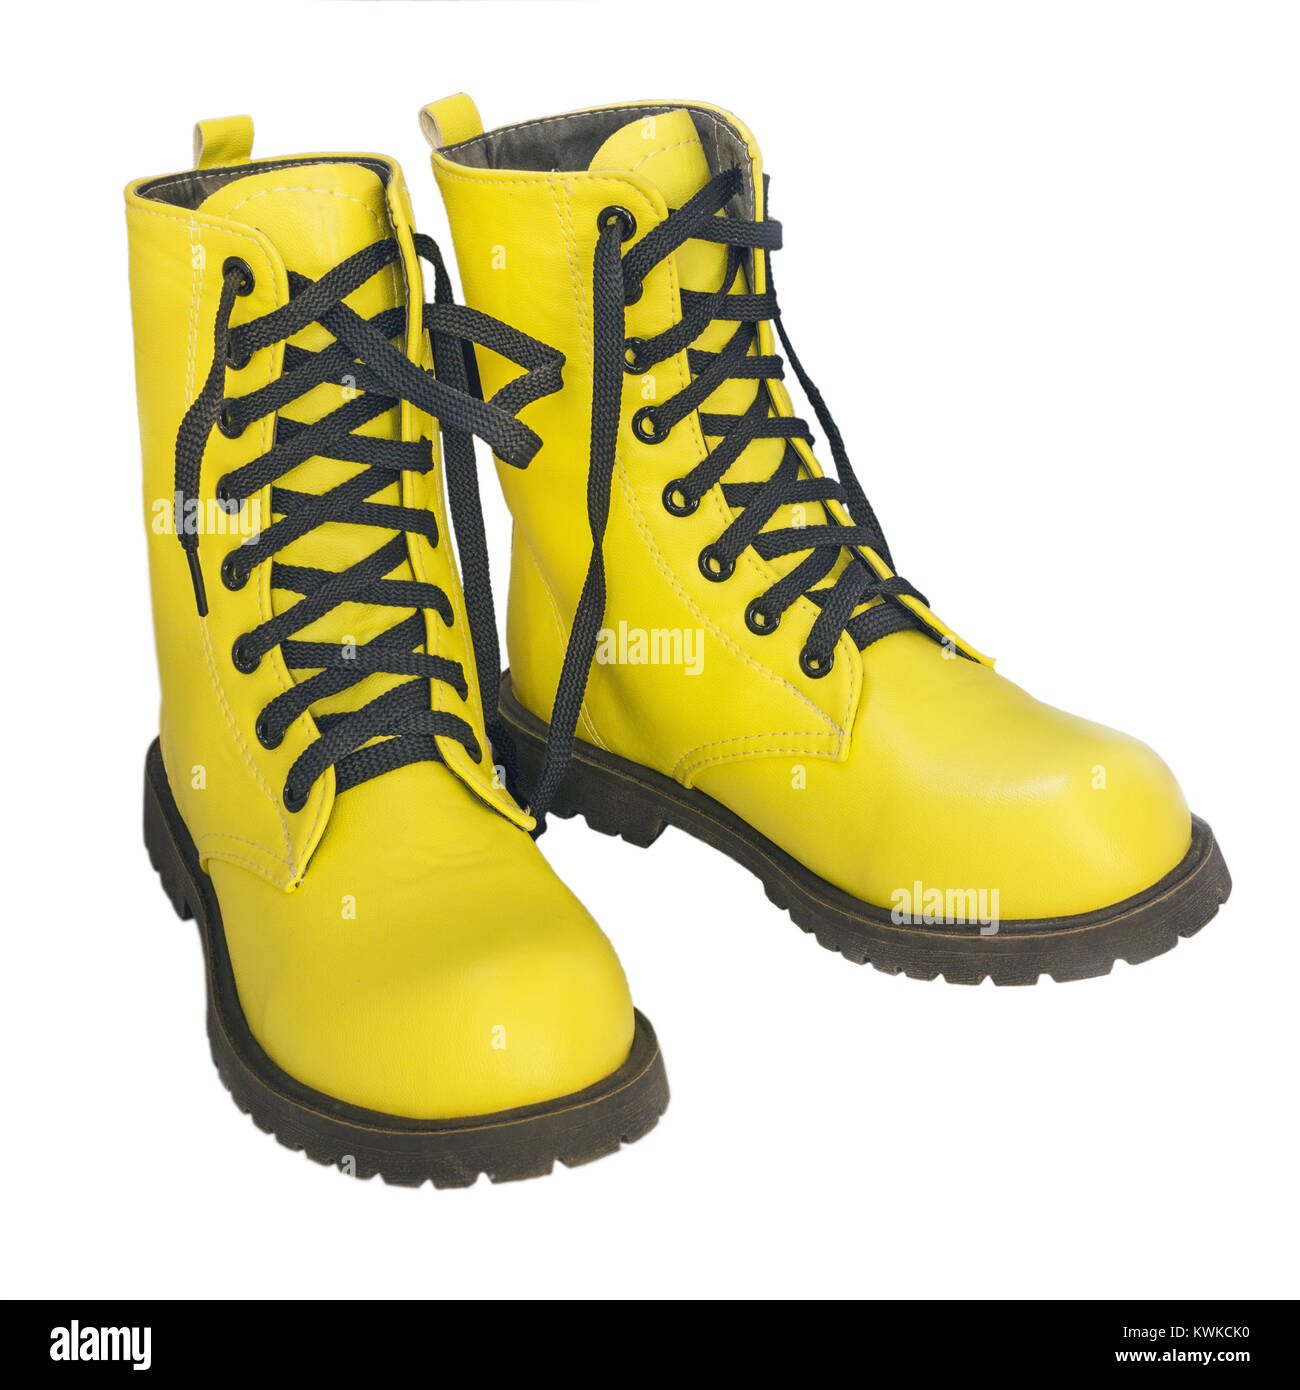 Acclaim Lacets Rond Sports Hiking Boot Trainer 130 cm 5 mm belle deux couleur 